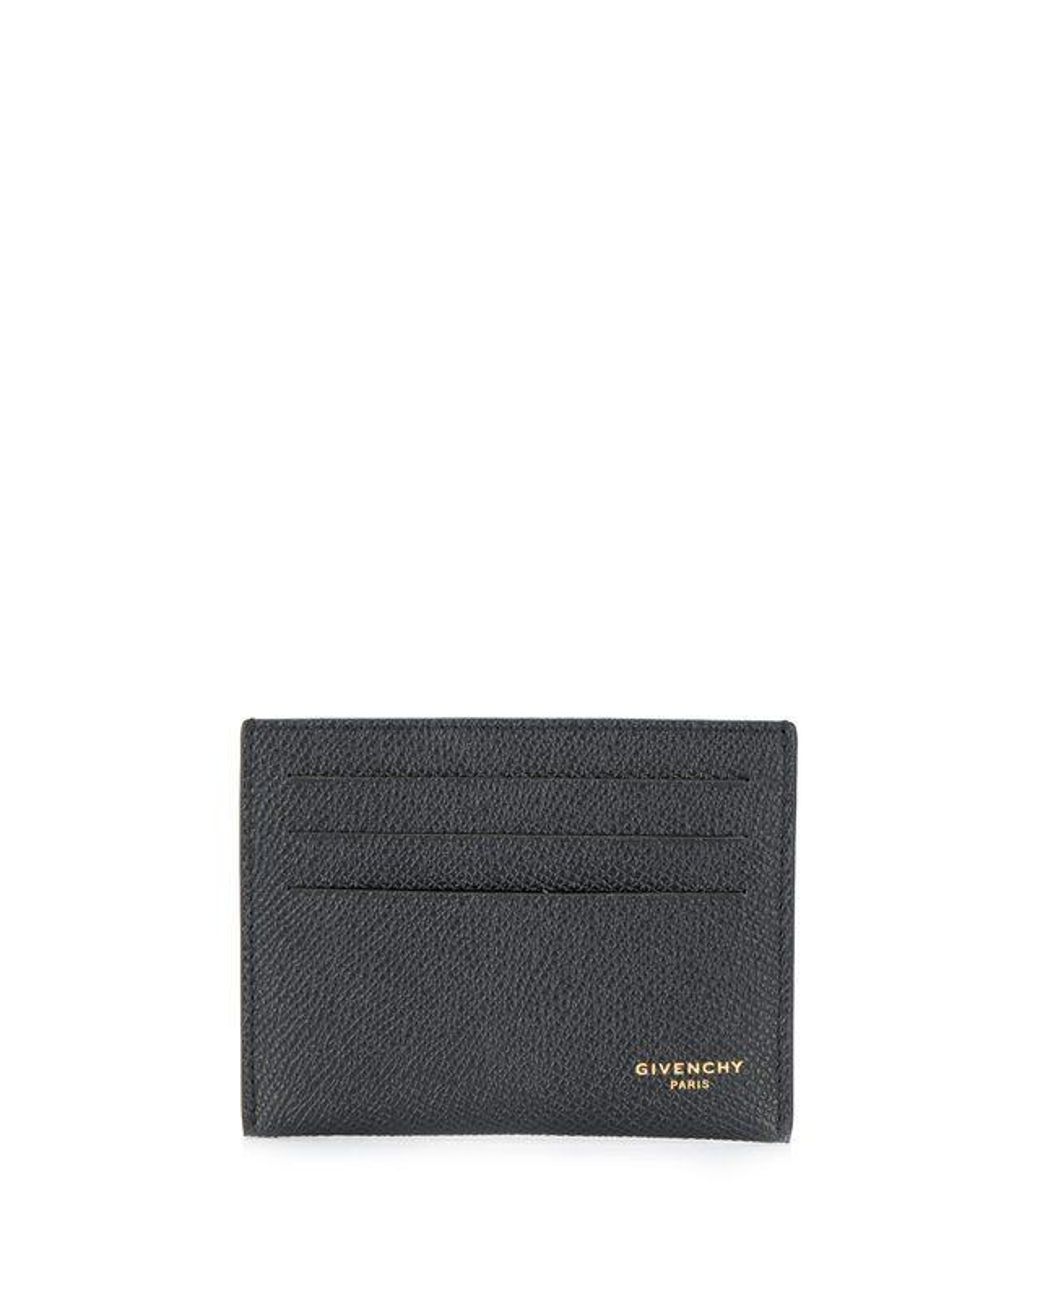 Givenchy Logo Print Leather Card Holder in Black for Men - Lyst